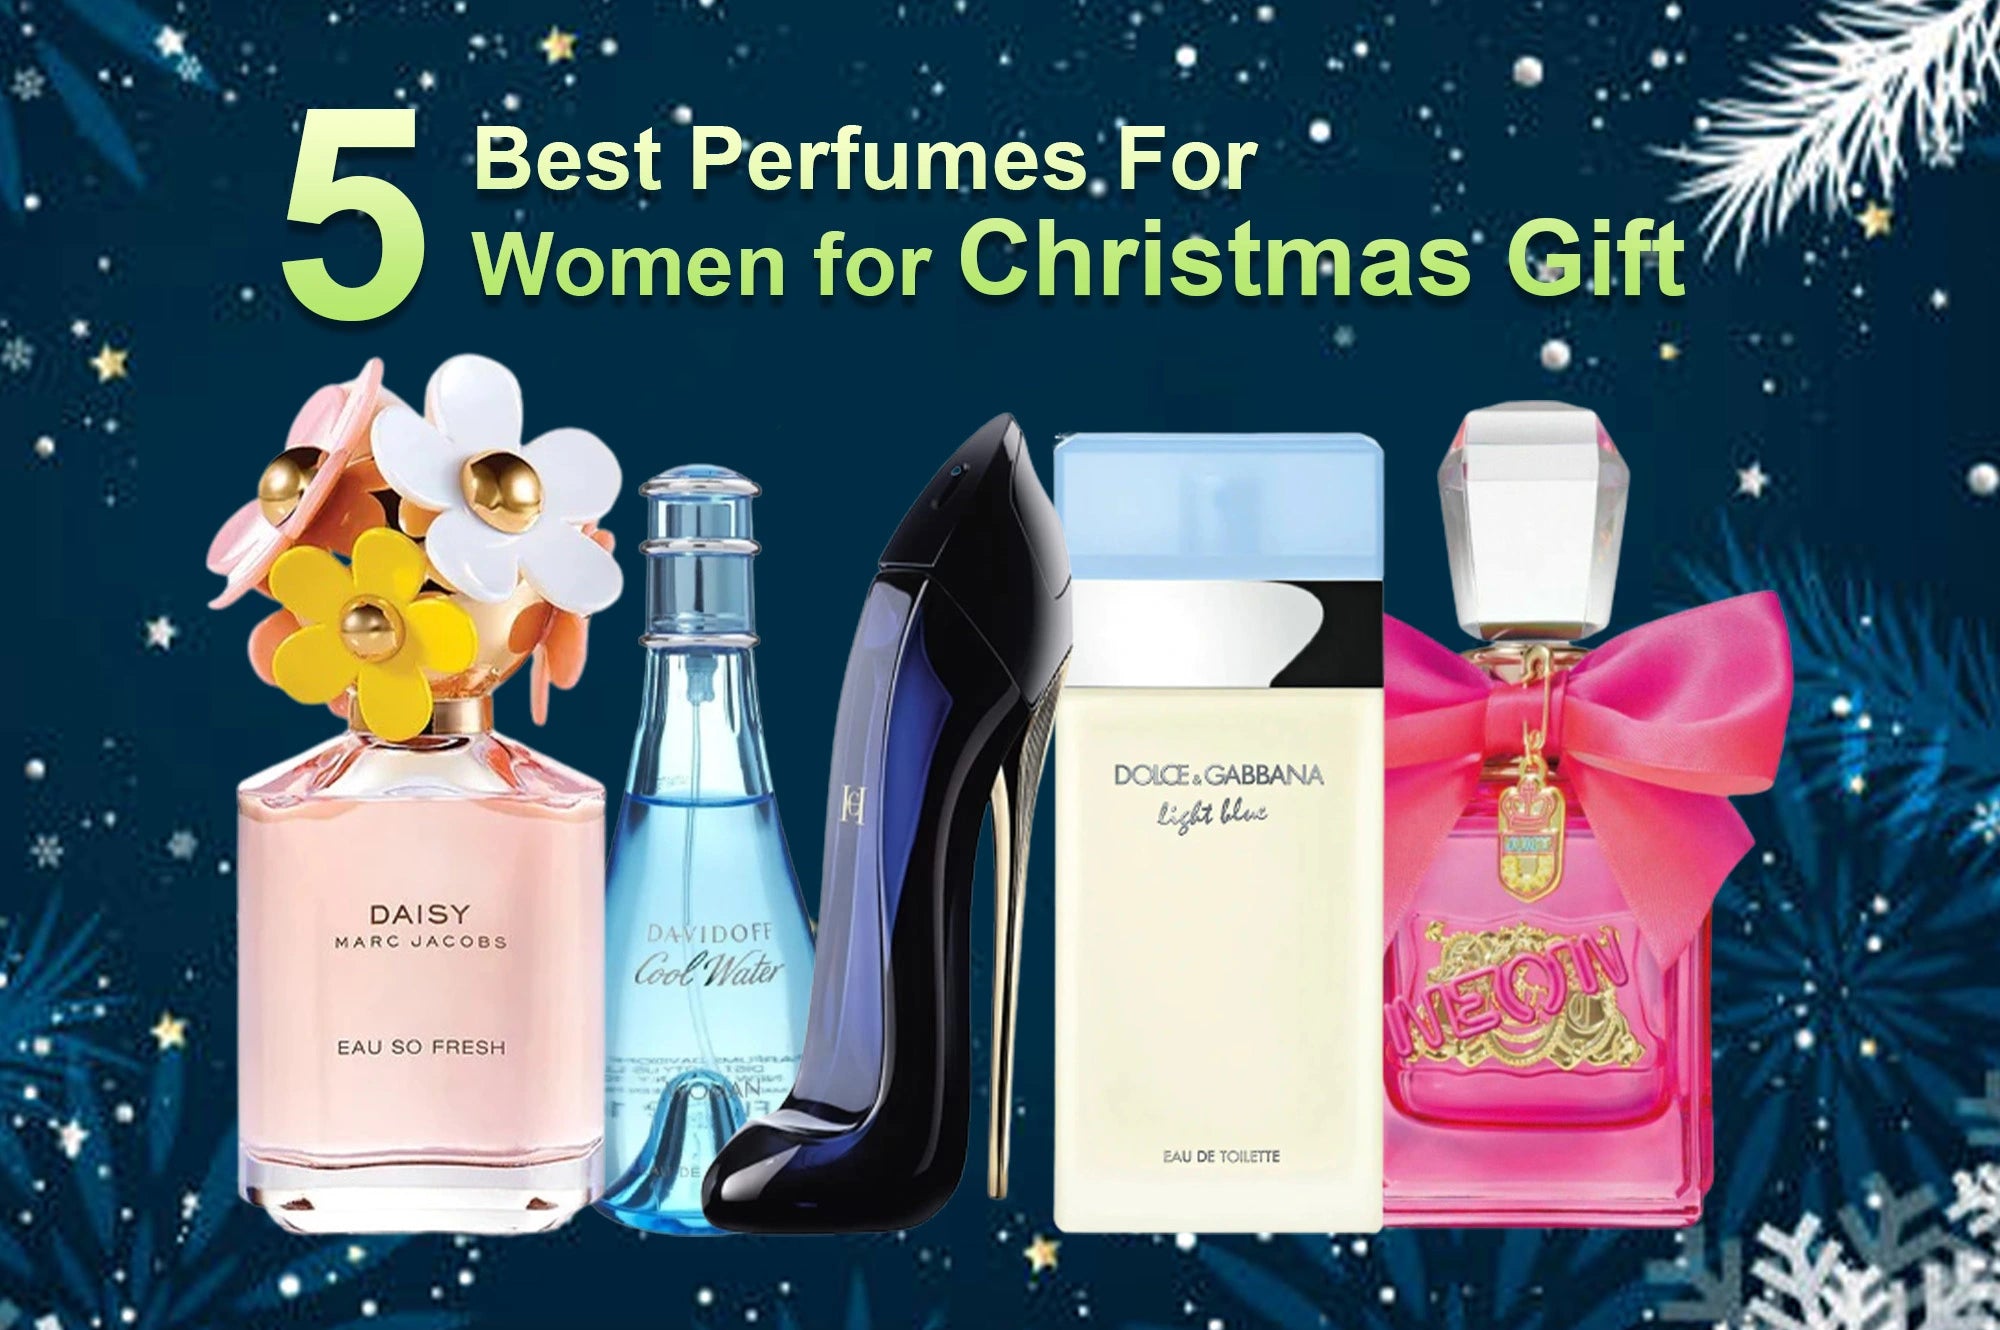 5 Best Perfumes For Women for Christmas Gift